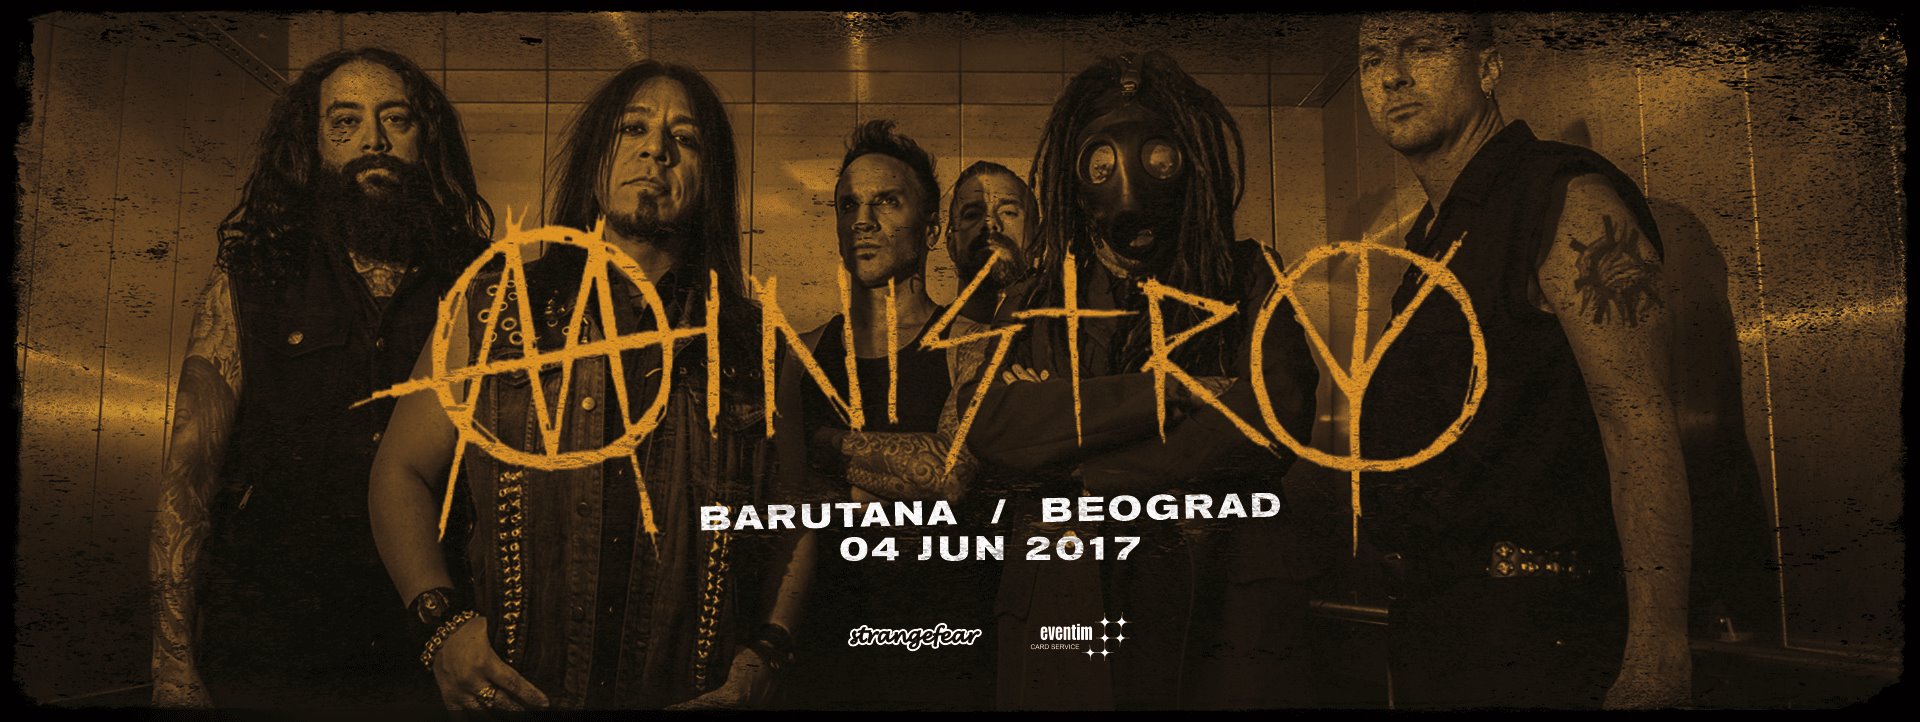 Ministry Live: Barutana – Belgrade